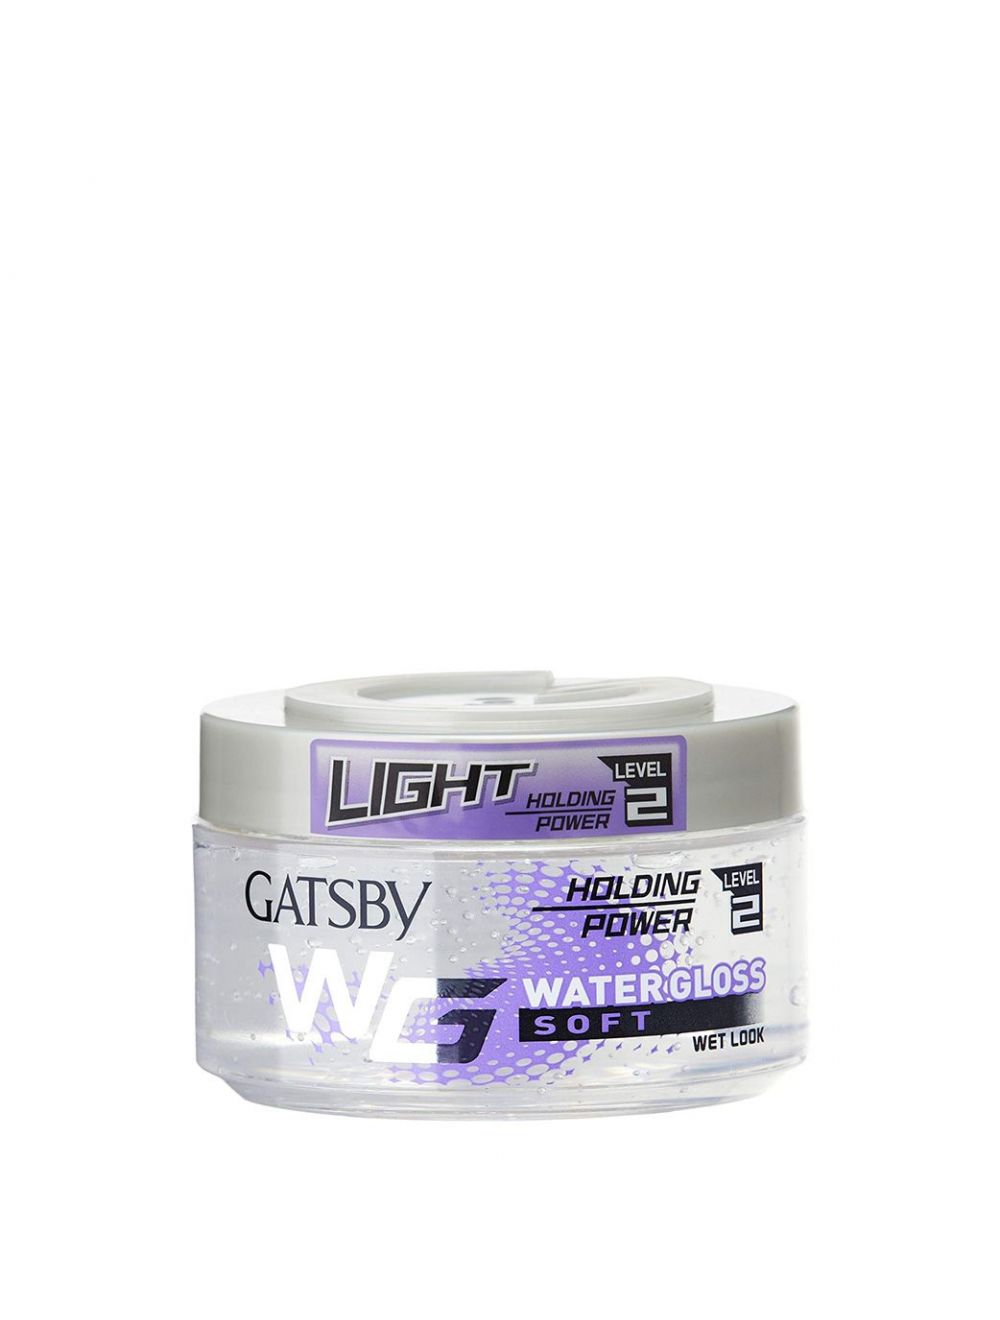 Gatsby Water Gloss - Soft (30gm)- Level 2 - Niram